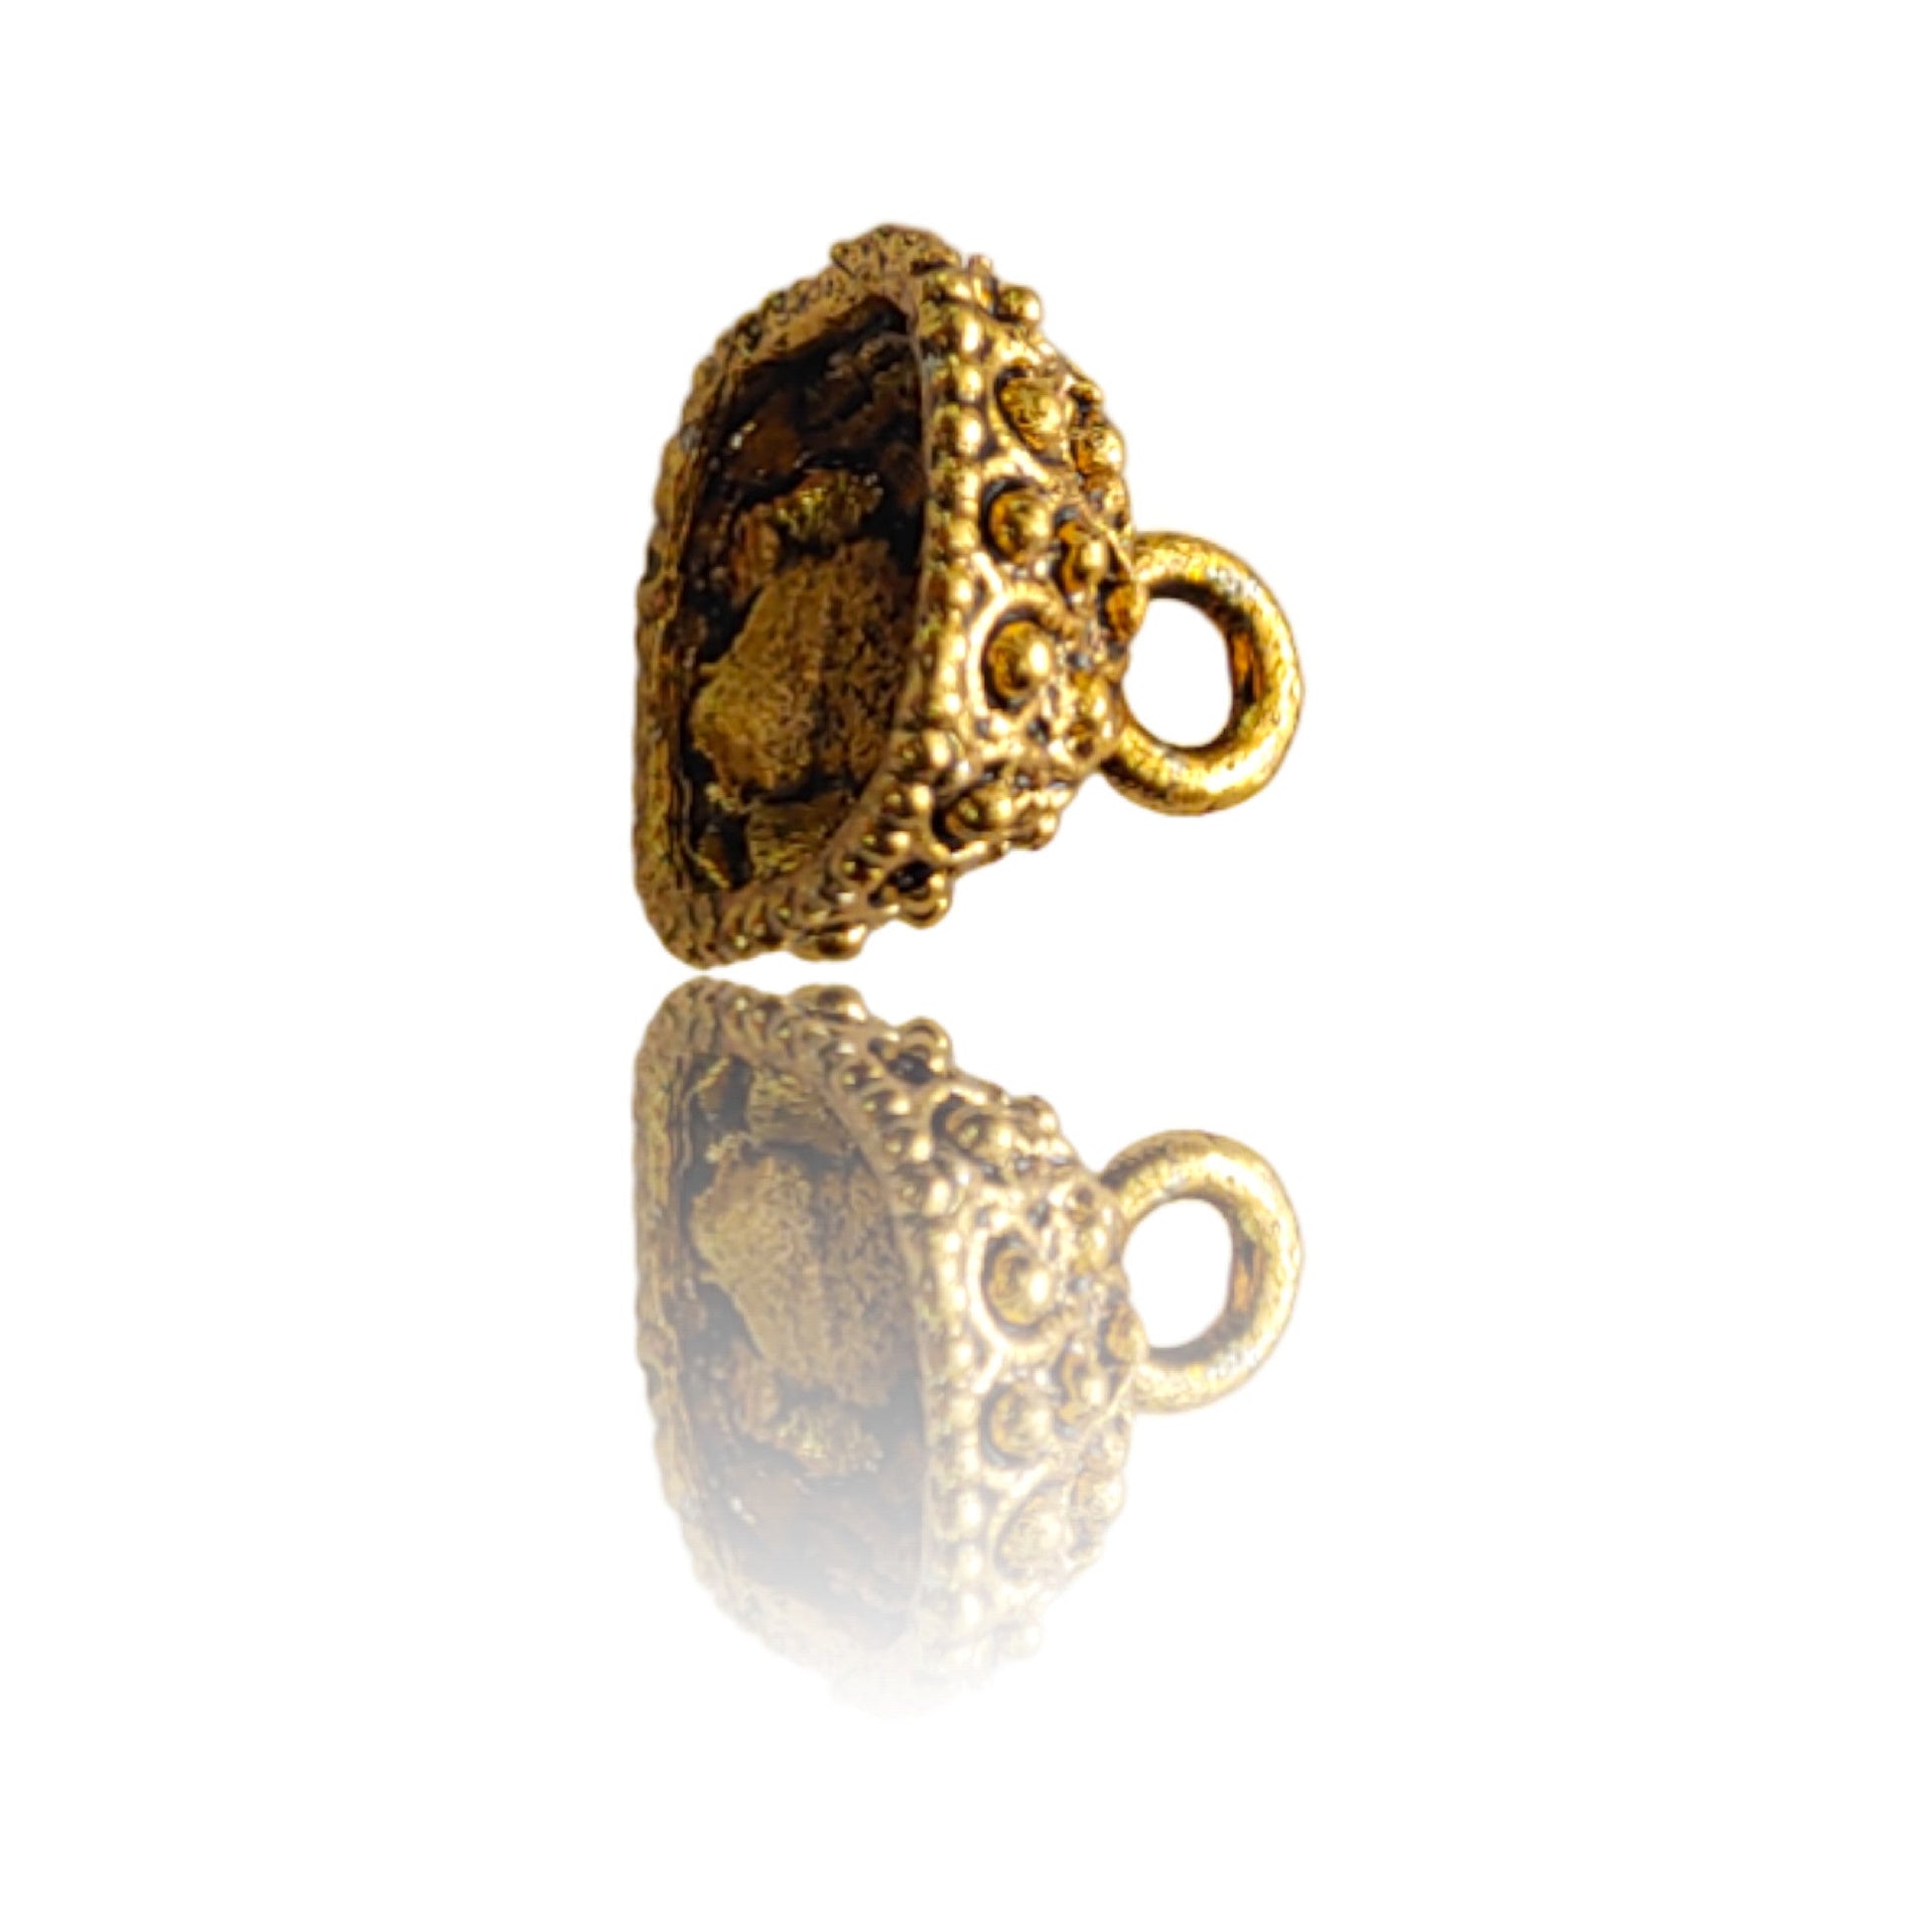 Indian Petals 100 Pcs Round Shape Jhumki Casted Motif for Rakhi, Jewelry designing and Craft Making or Decor